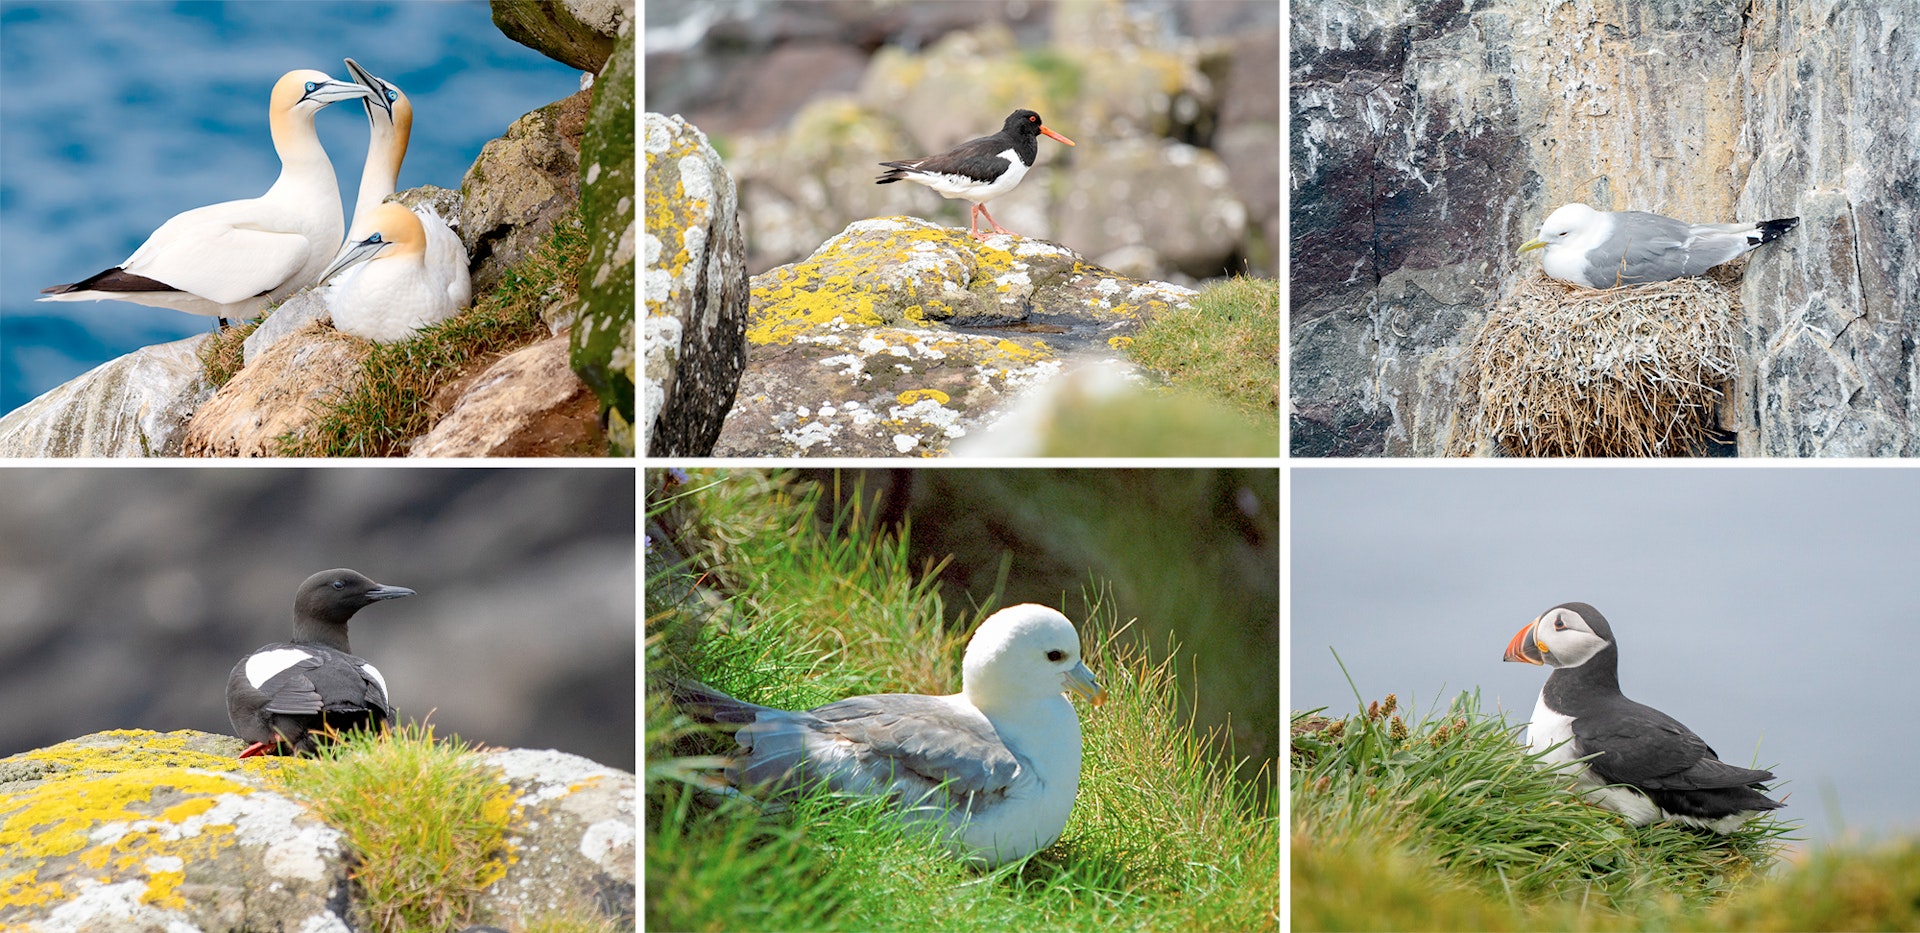 faroe-islands-collage-birds.jpg